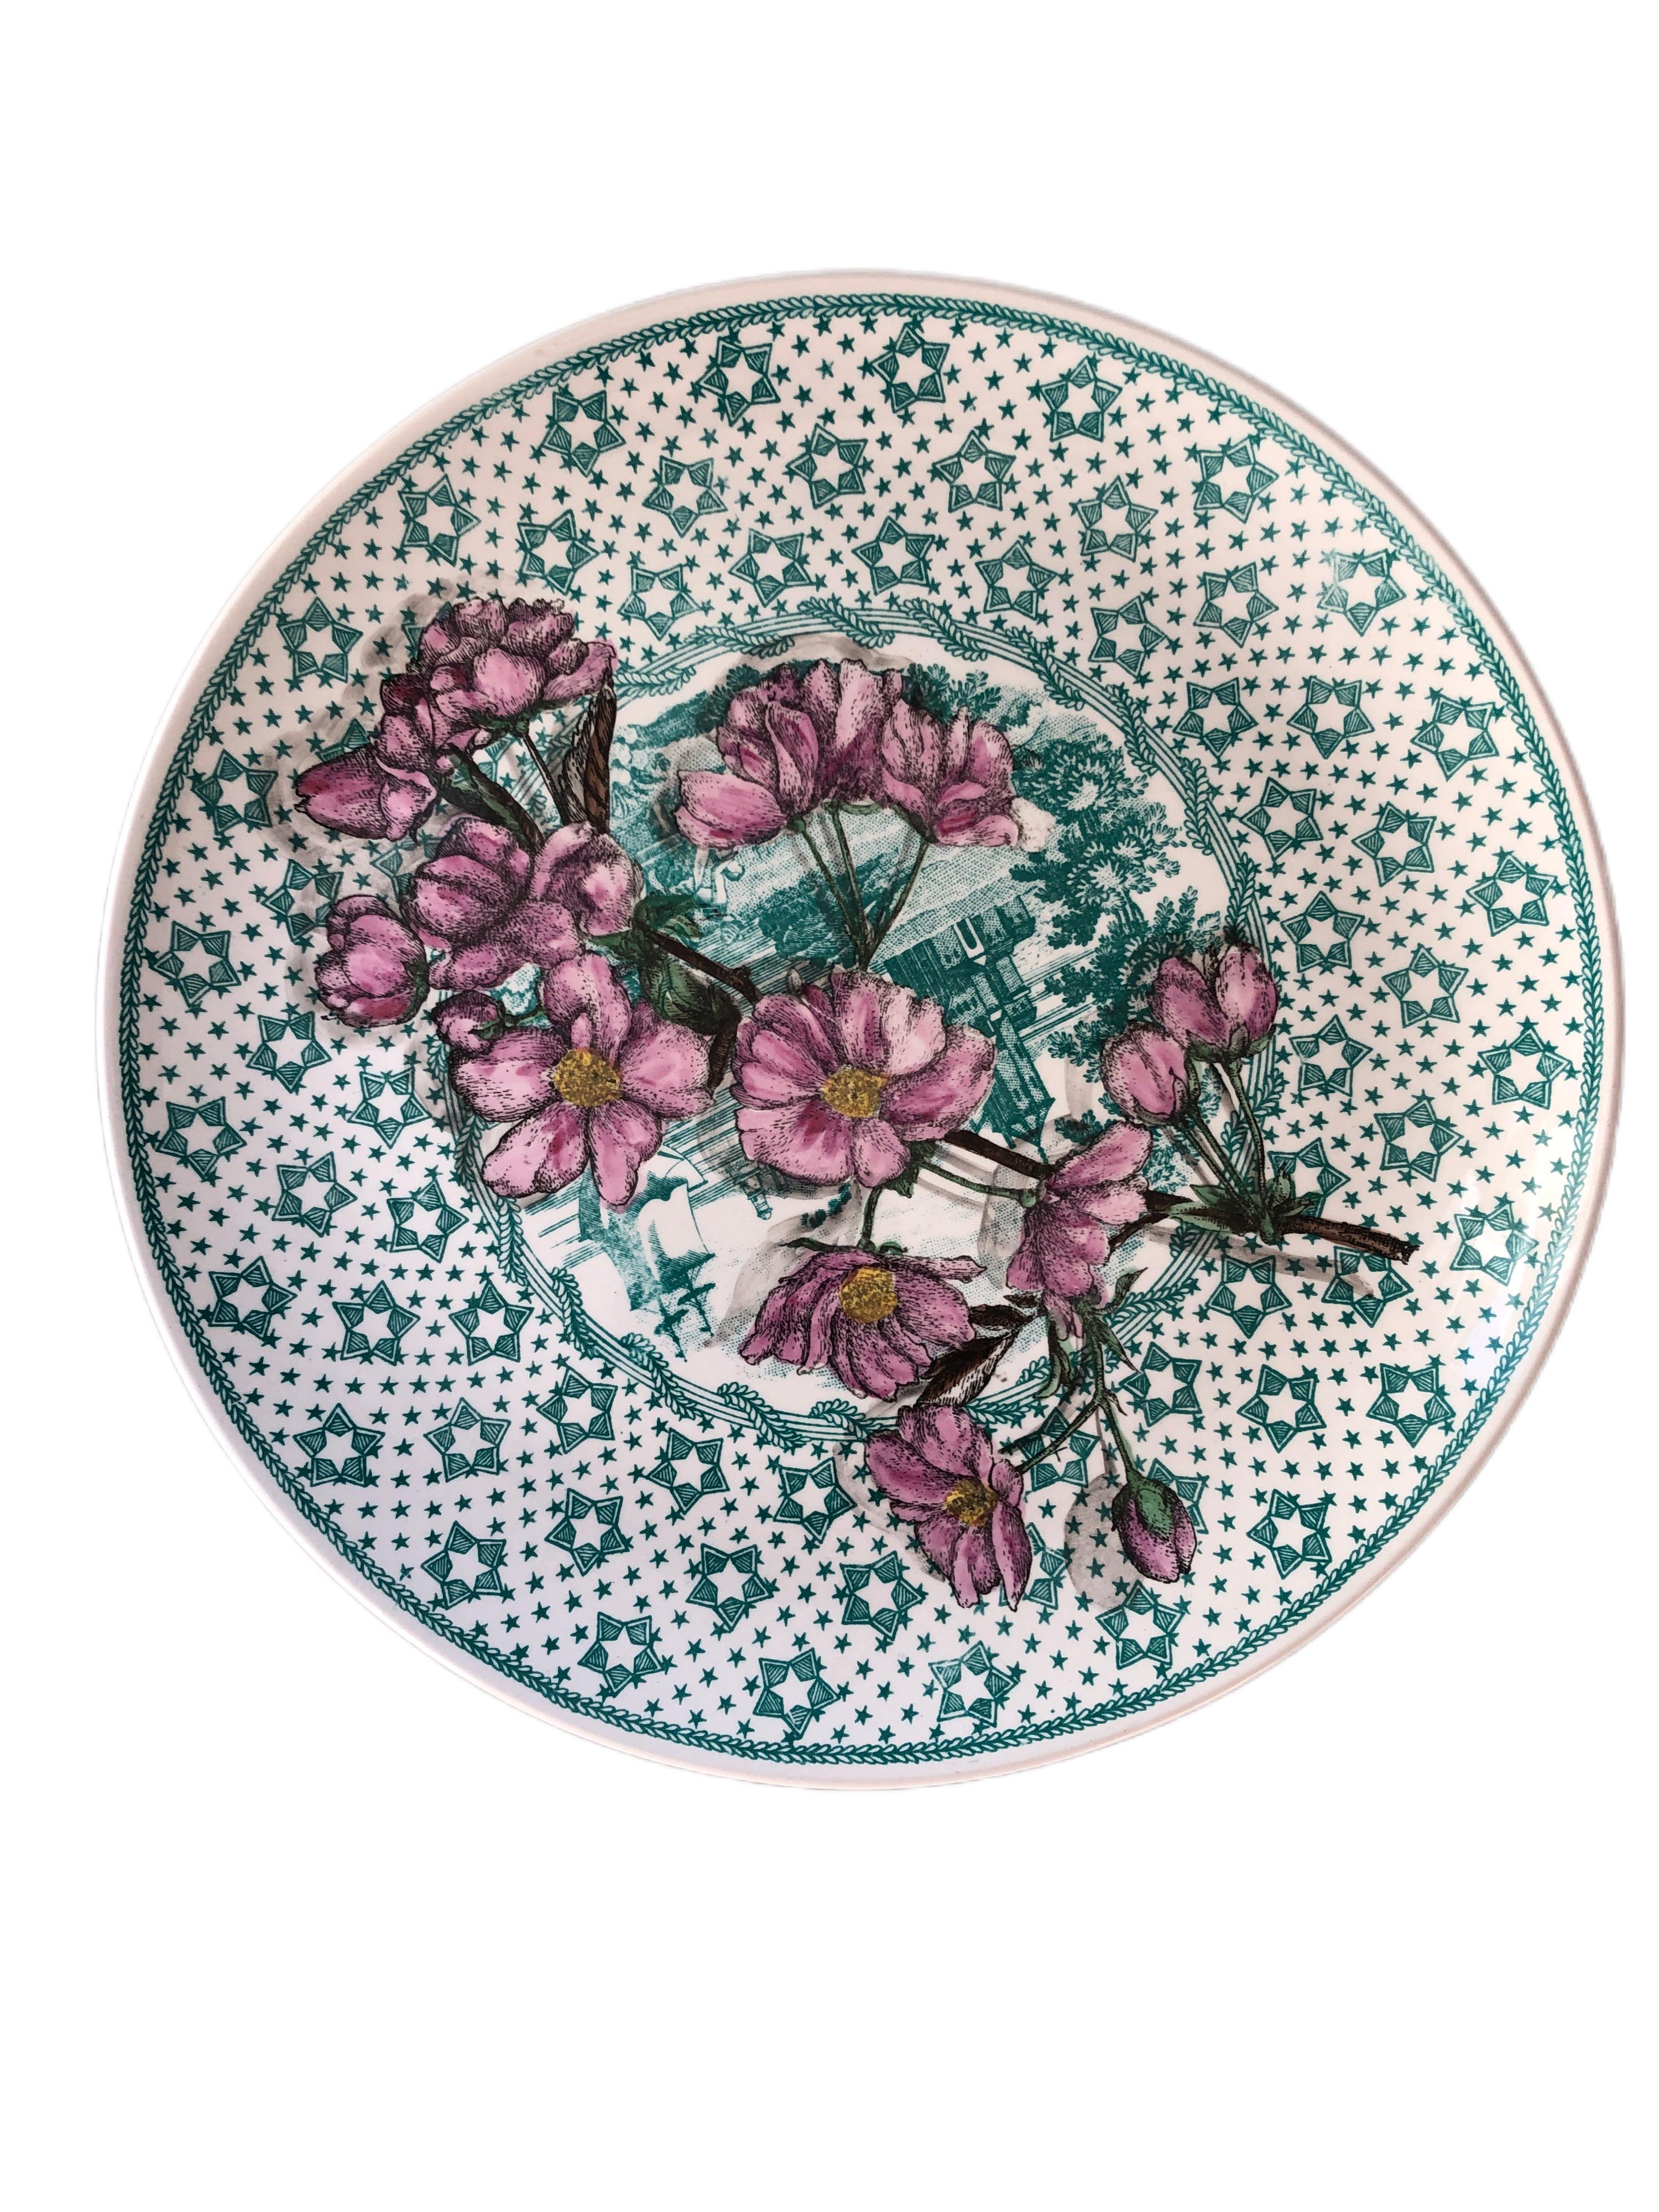 Italian Six Mid-Century Modern Handpainted Plates by Piero Fornasetti, 